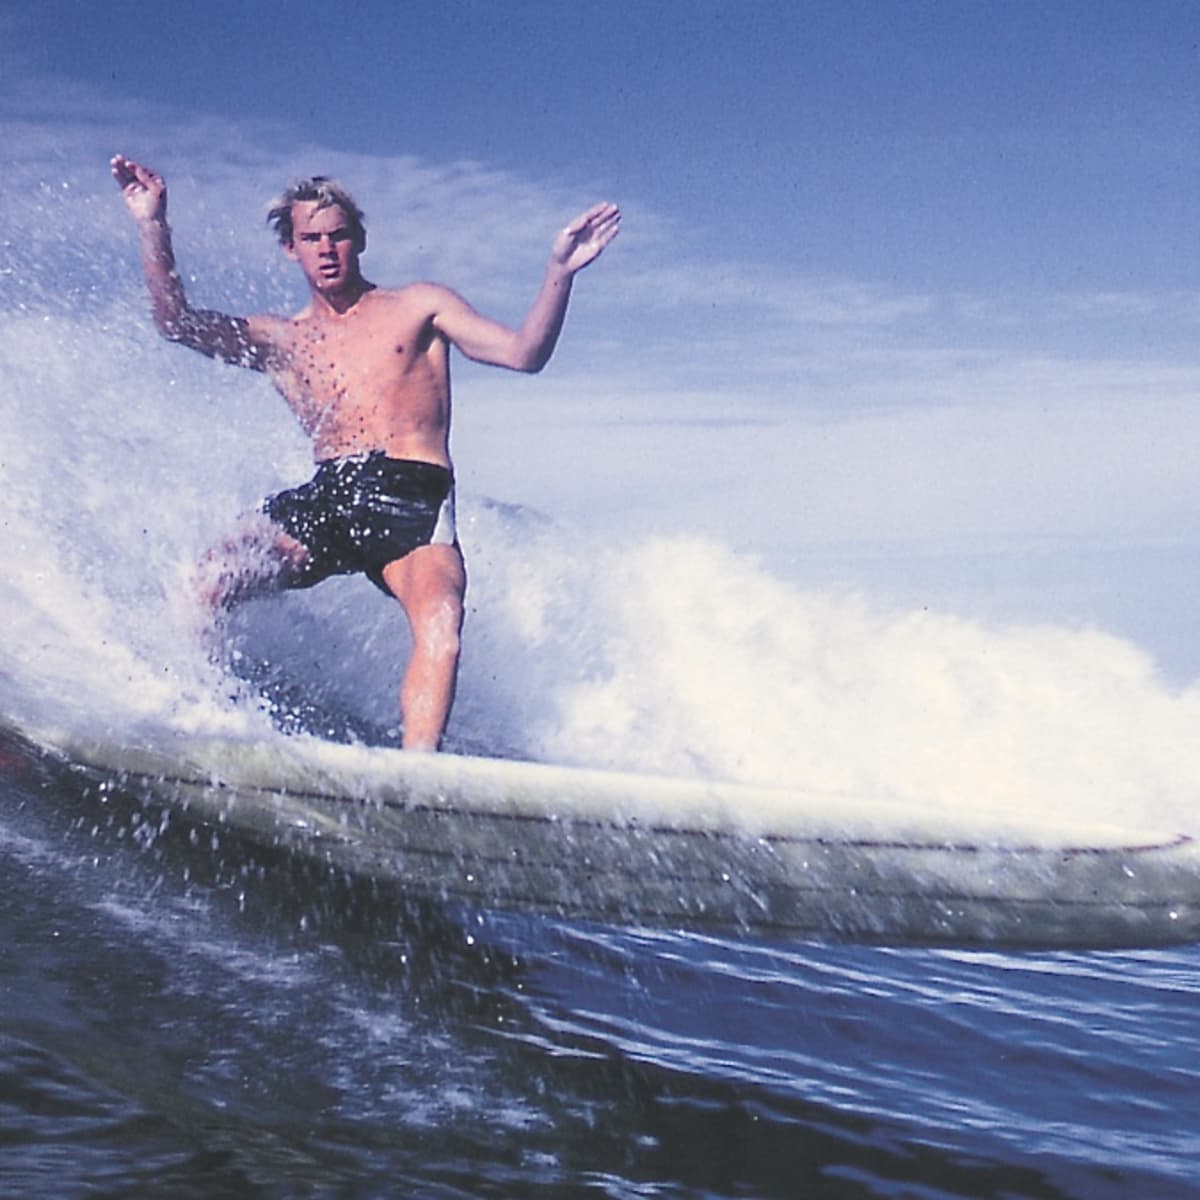 Bill Hamilton, Surferpedia - The Wiki Encyclopedia of Surfing